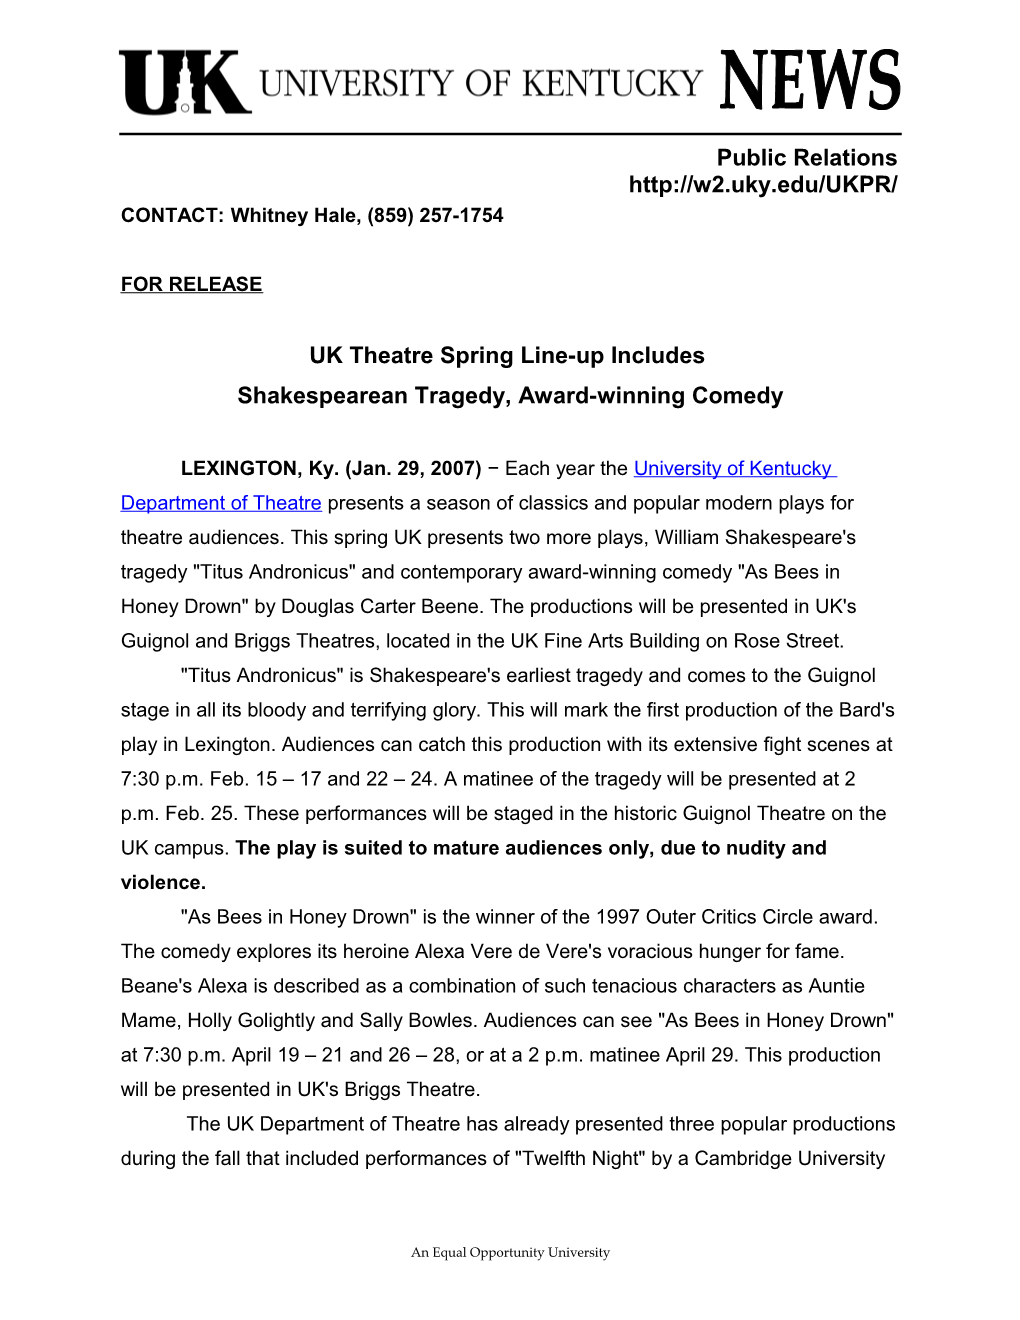 UK Theatre Spring Line-Upincludes